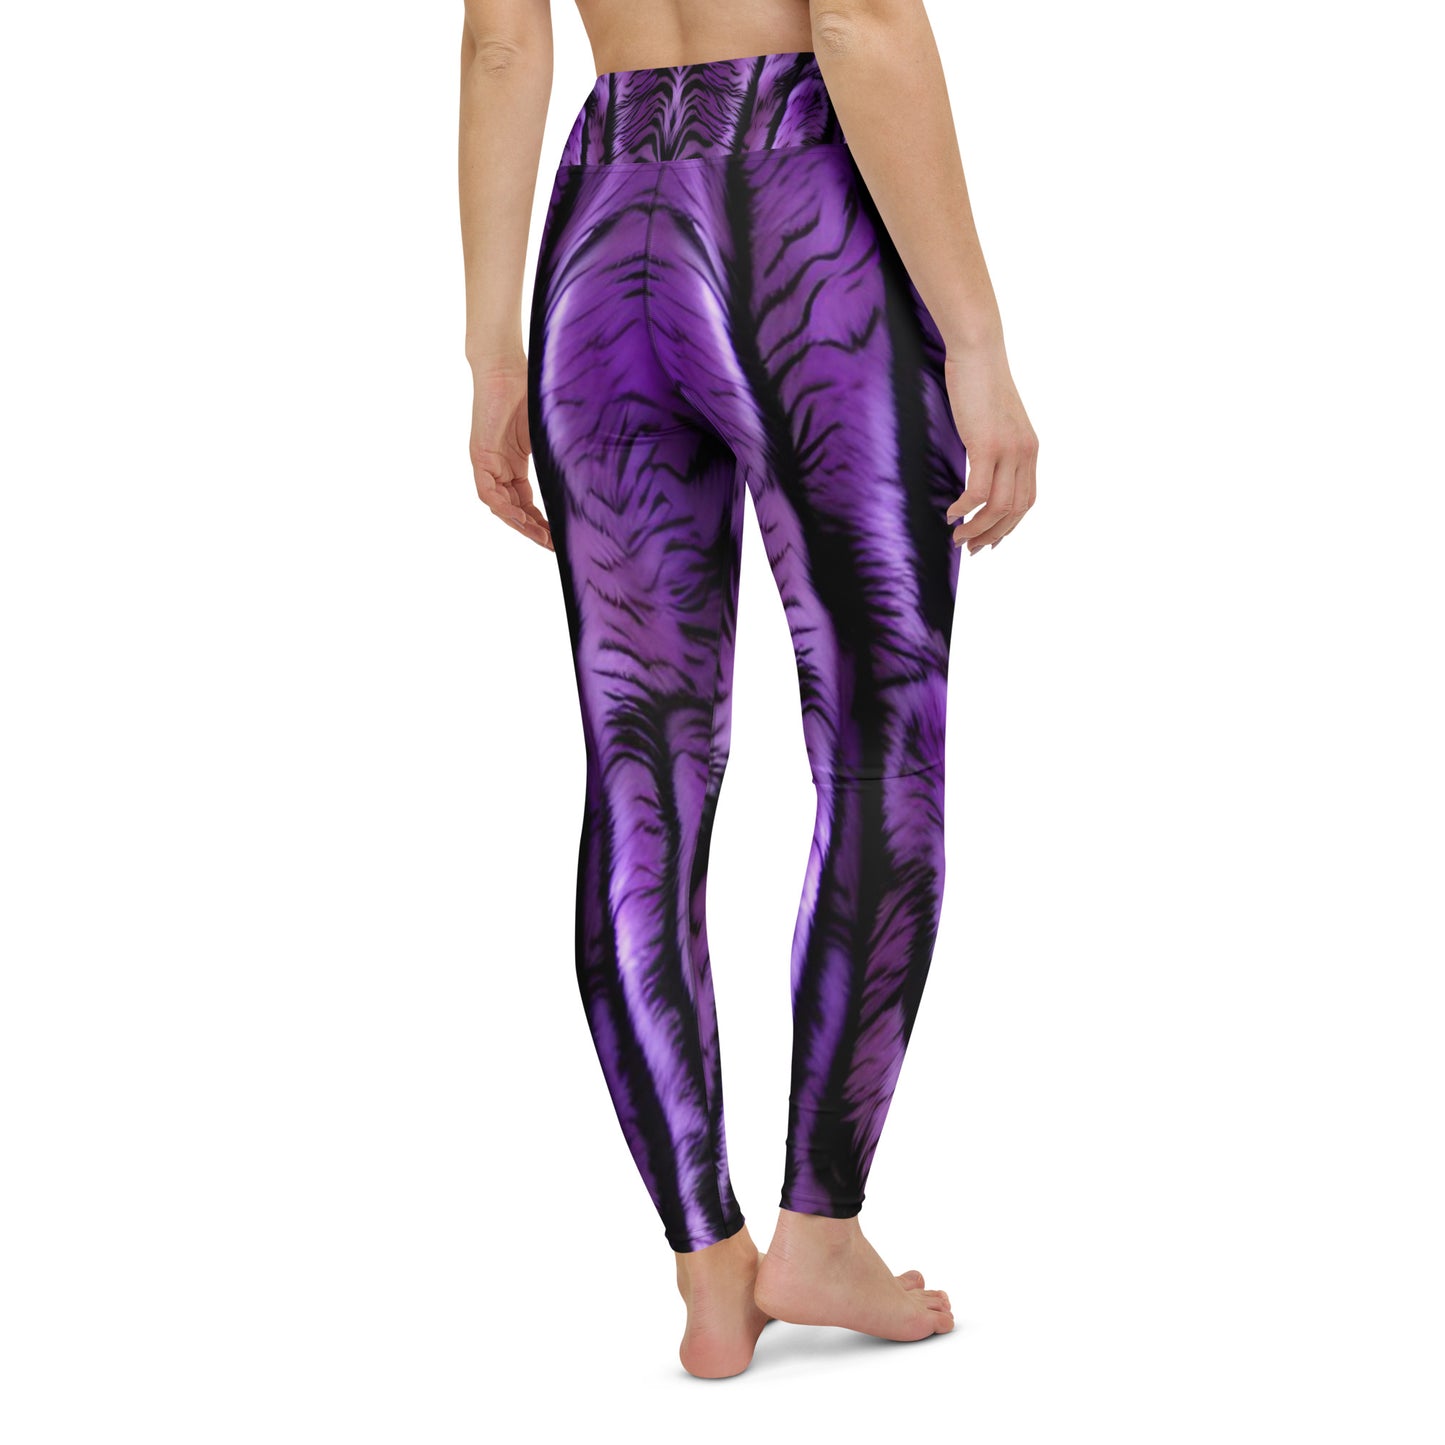 Purple Tiger Custom Print Yoga Leggings